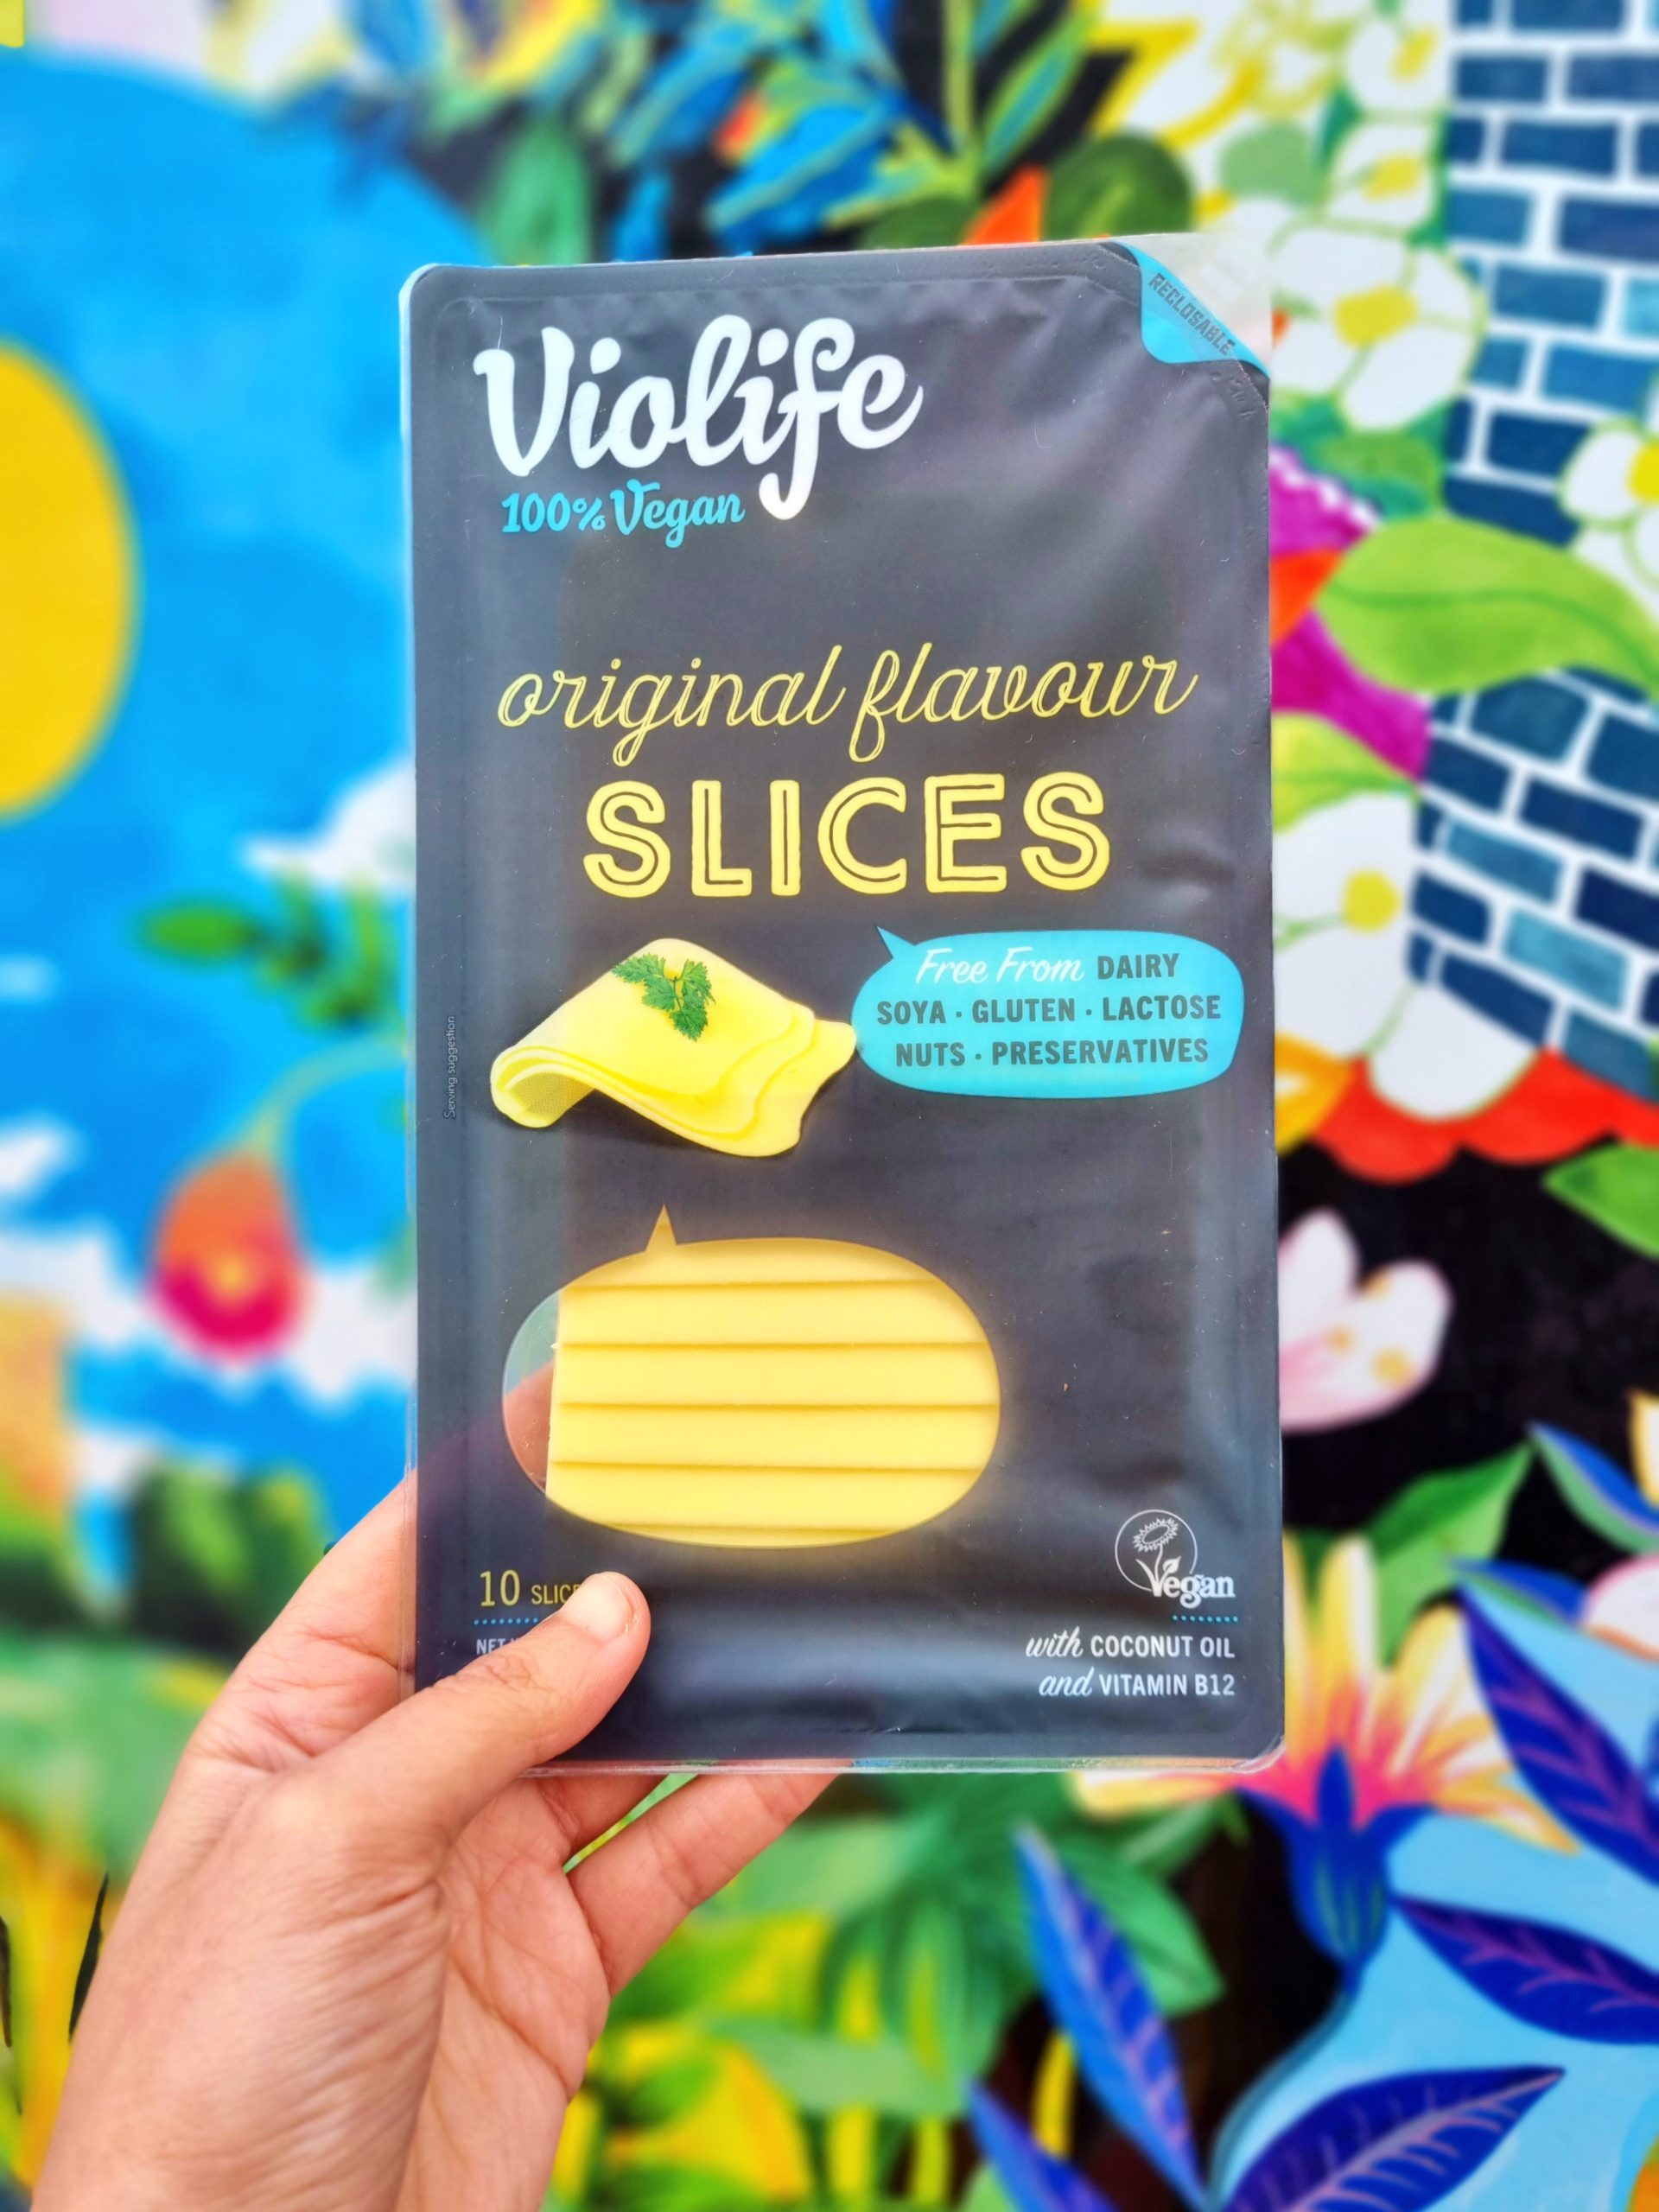 <img src="violife.jpg" alt="violife original flavour cheese slices"/> 